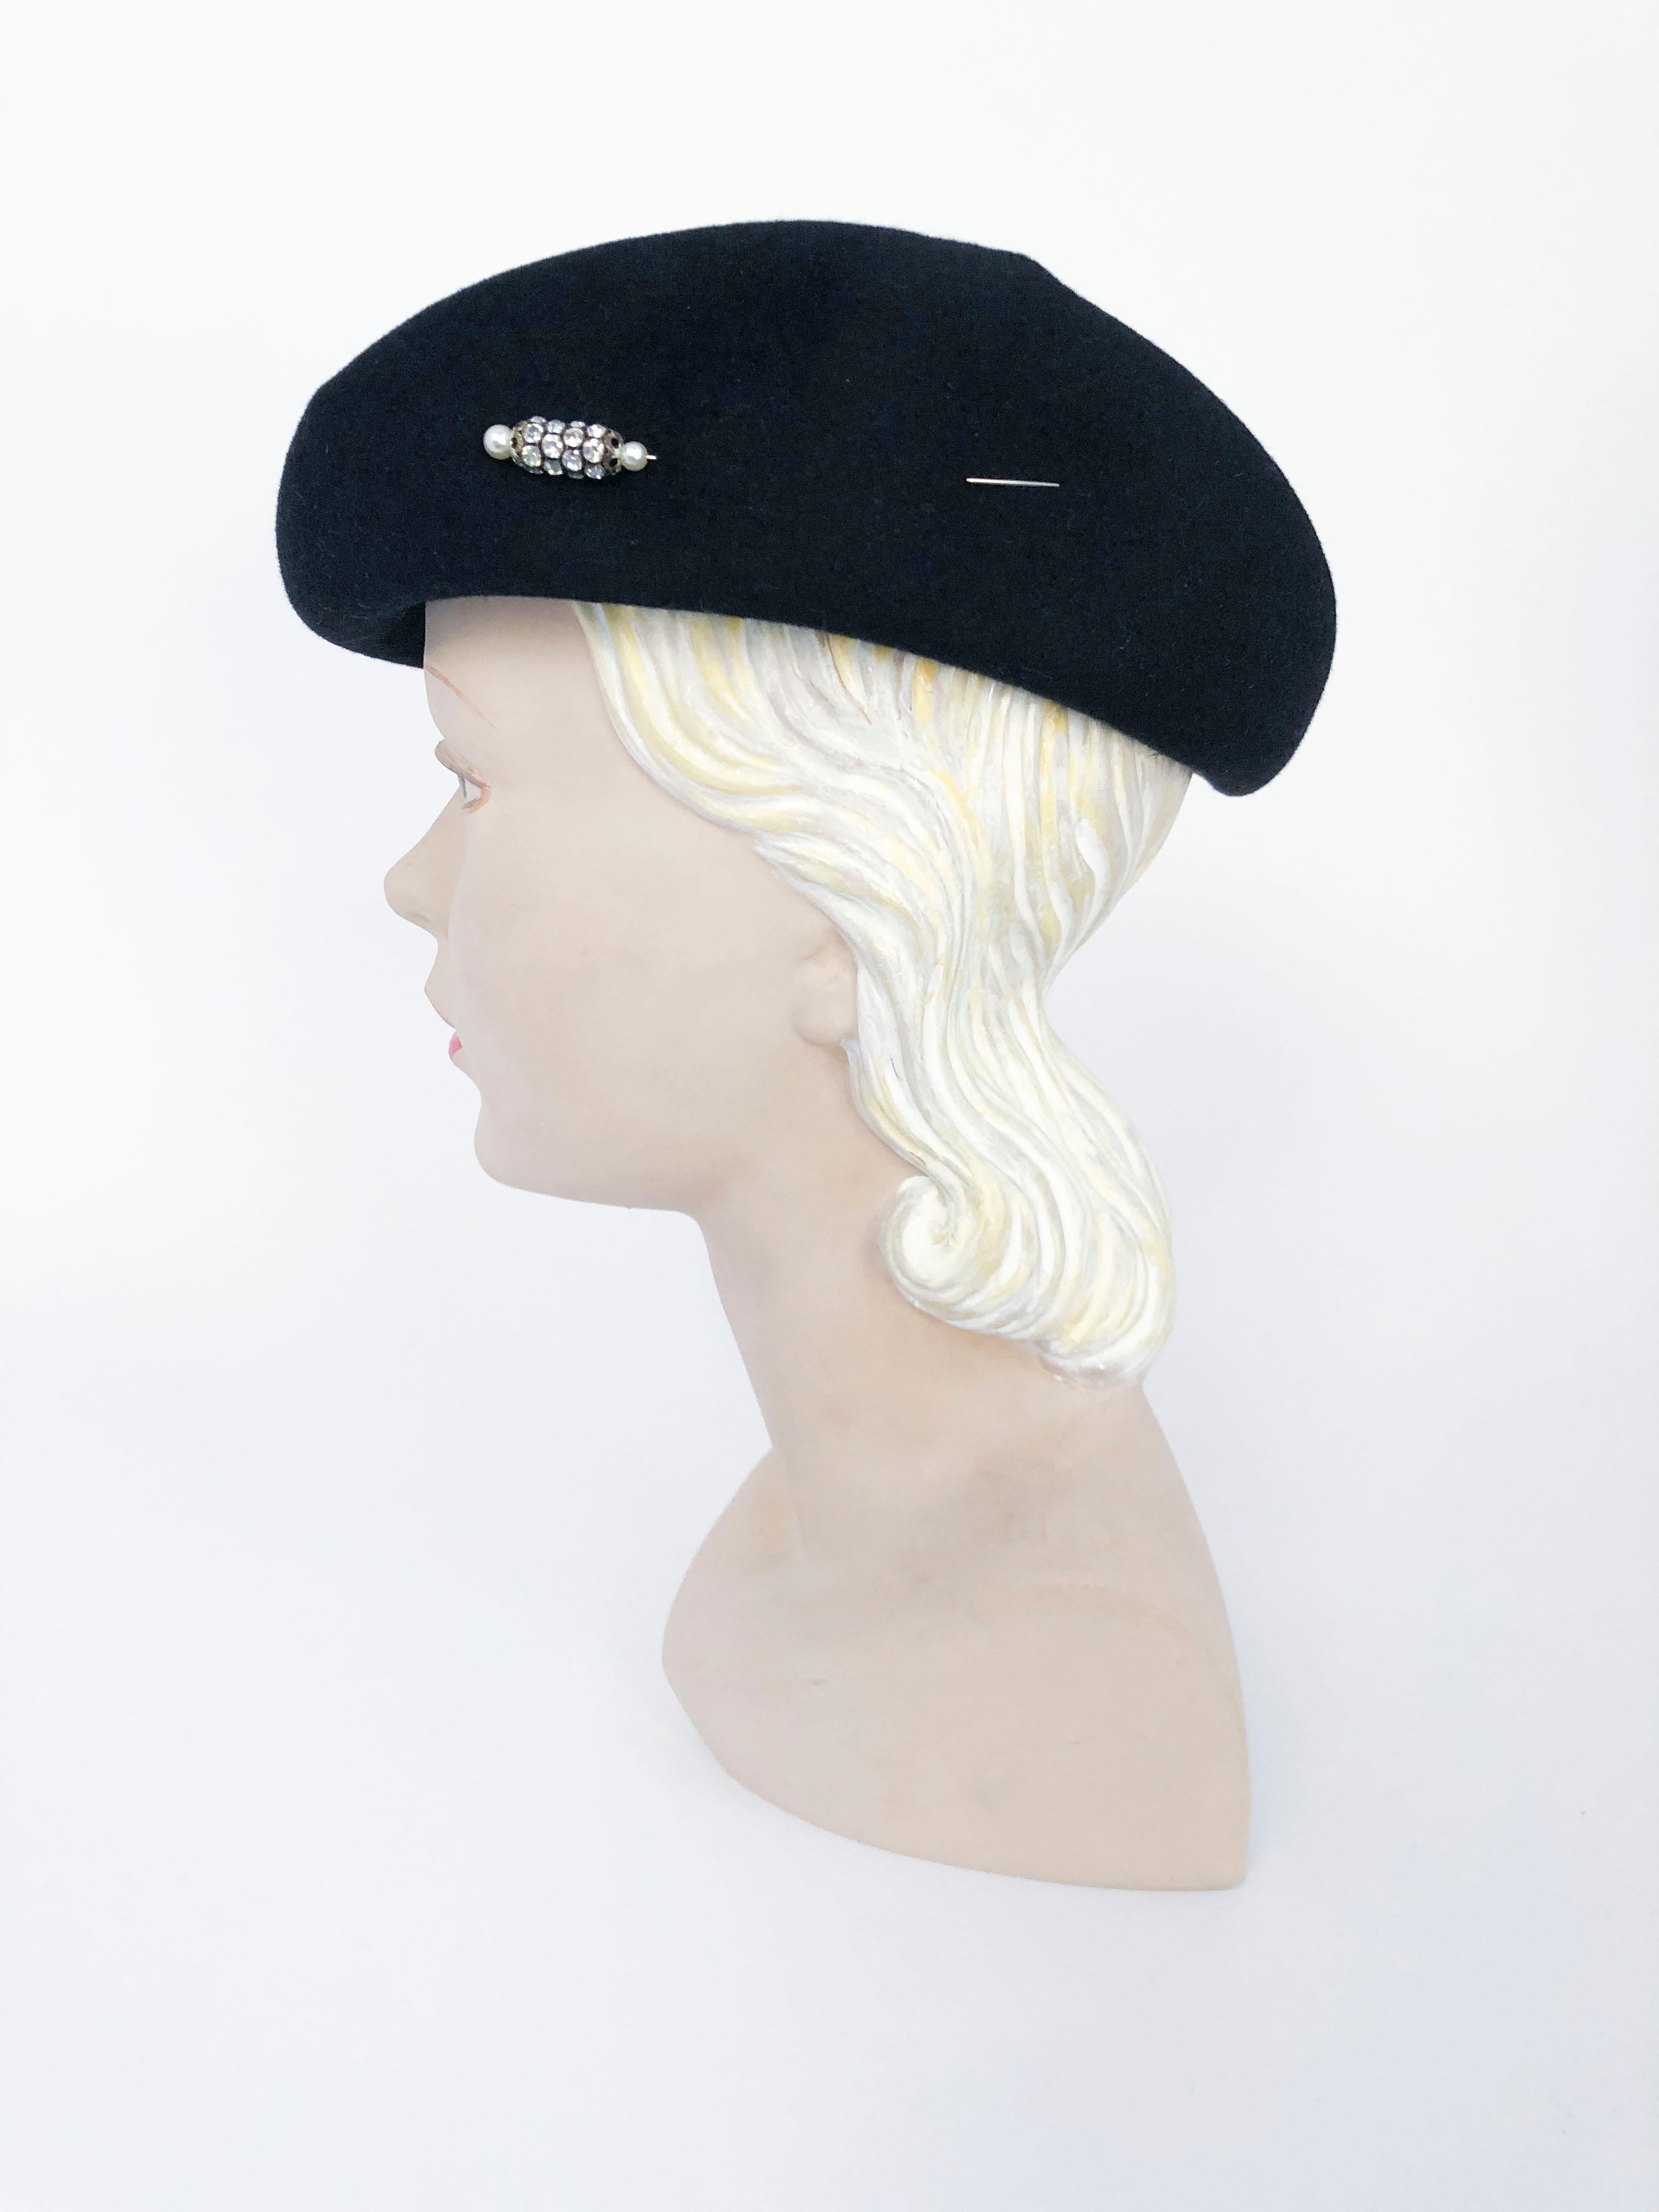 1960s/1970s Black Fur Felt Hat with Rhinestone Accents 1